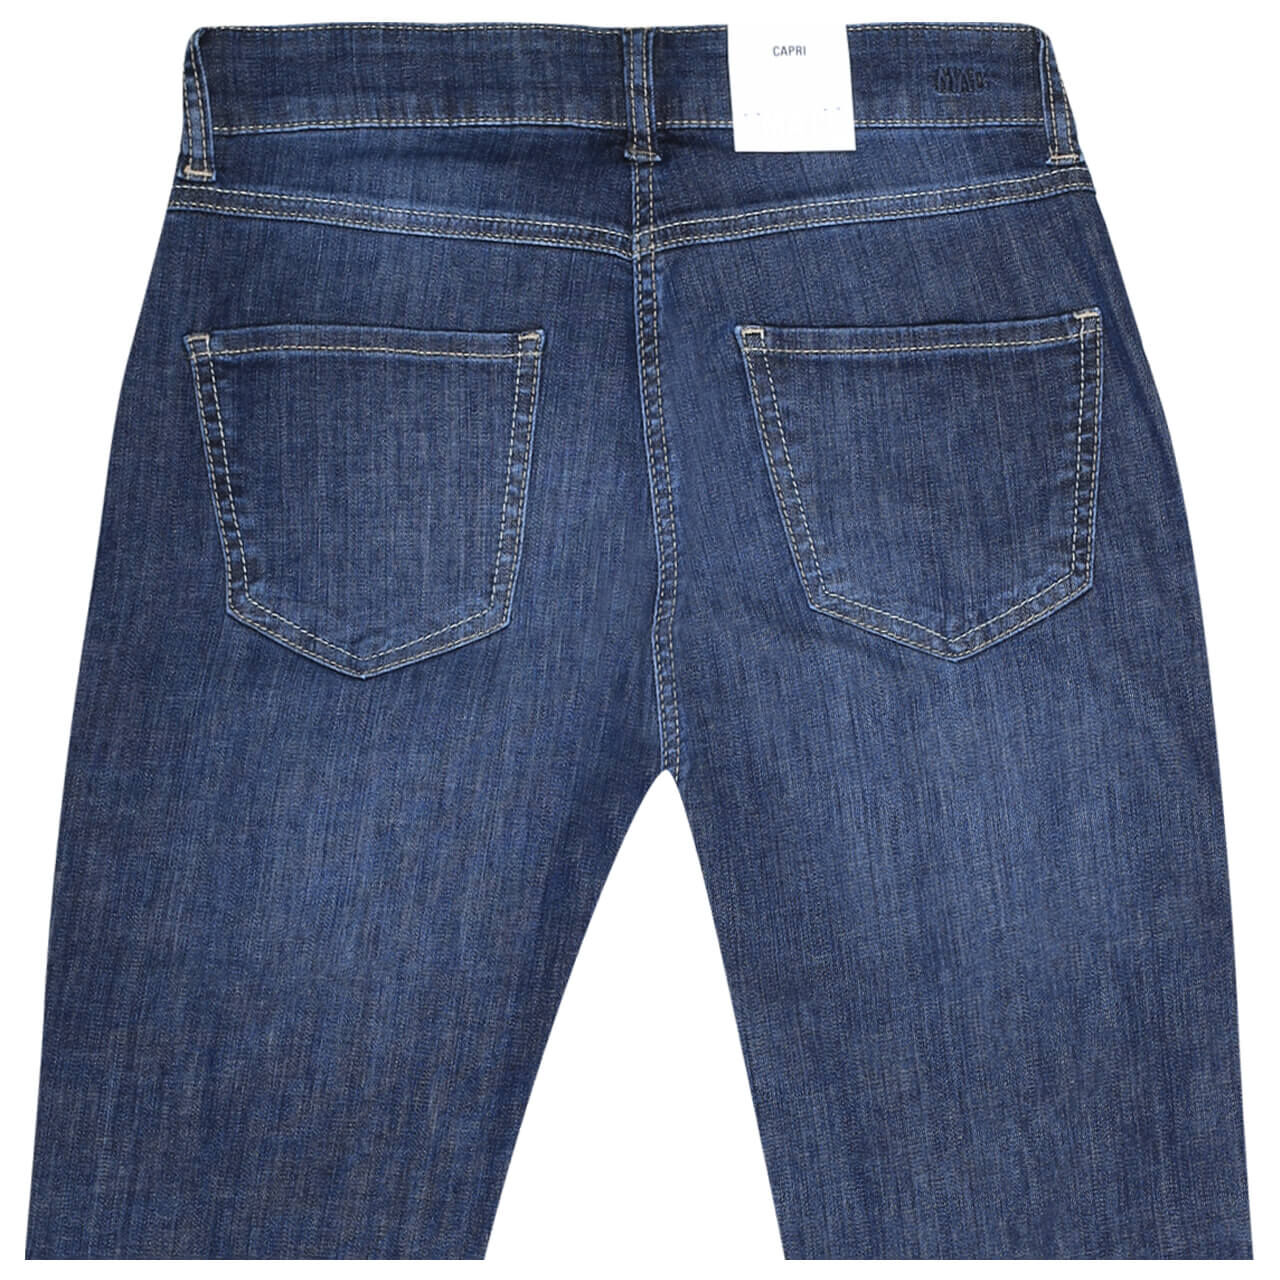 MAC Jeans Capri für Damen in Dunkelblau, FarbNr.: D845